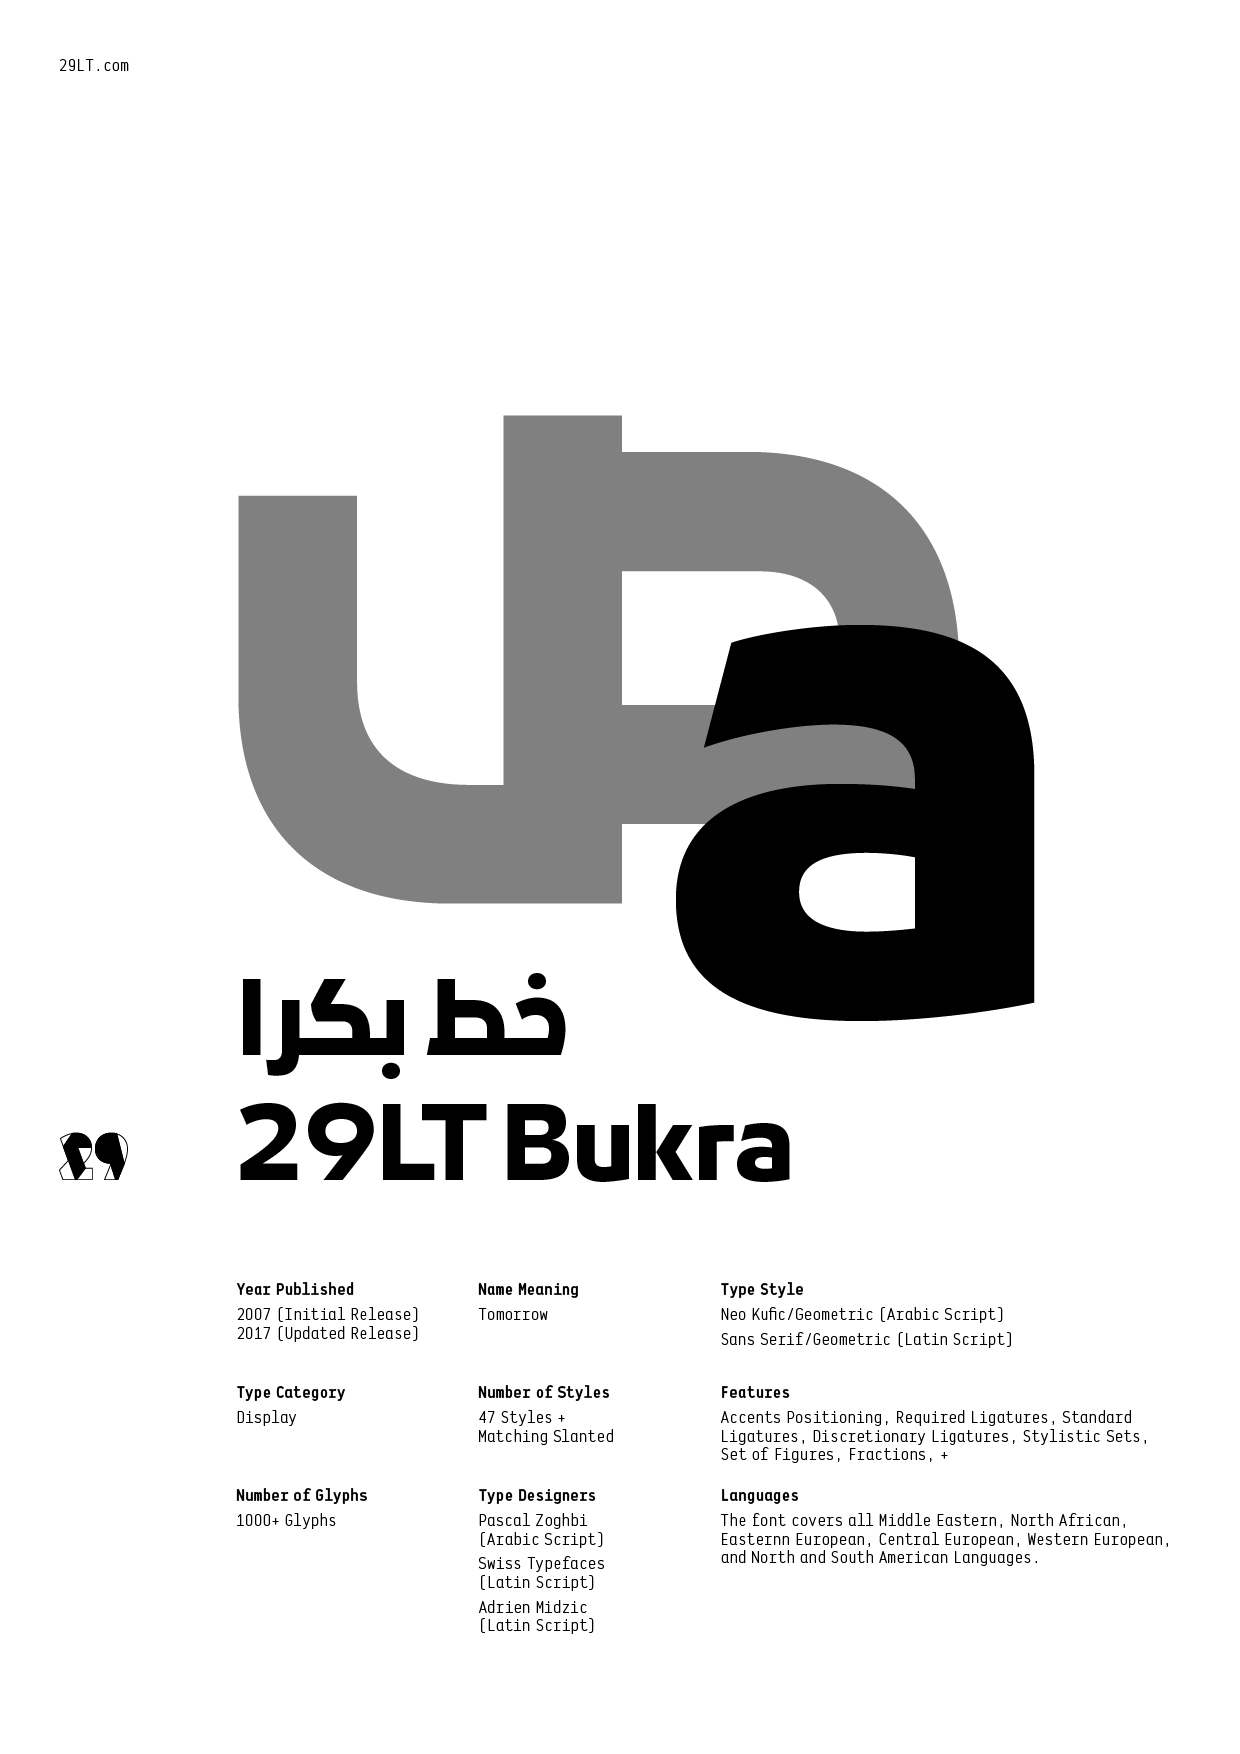 29LT Bukra Wide-PDF1